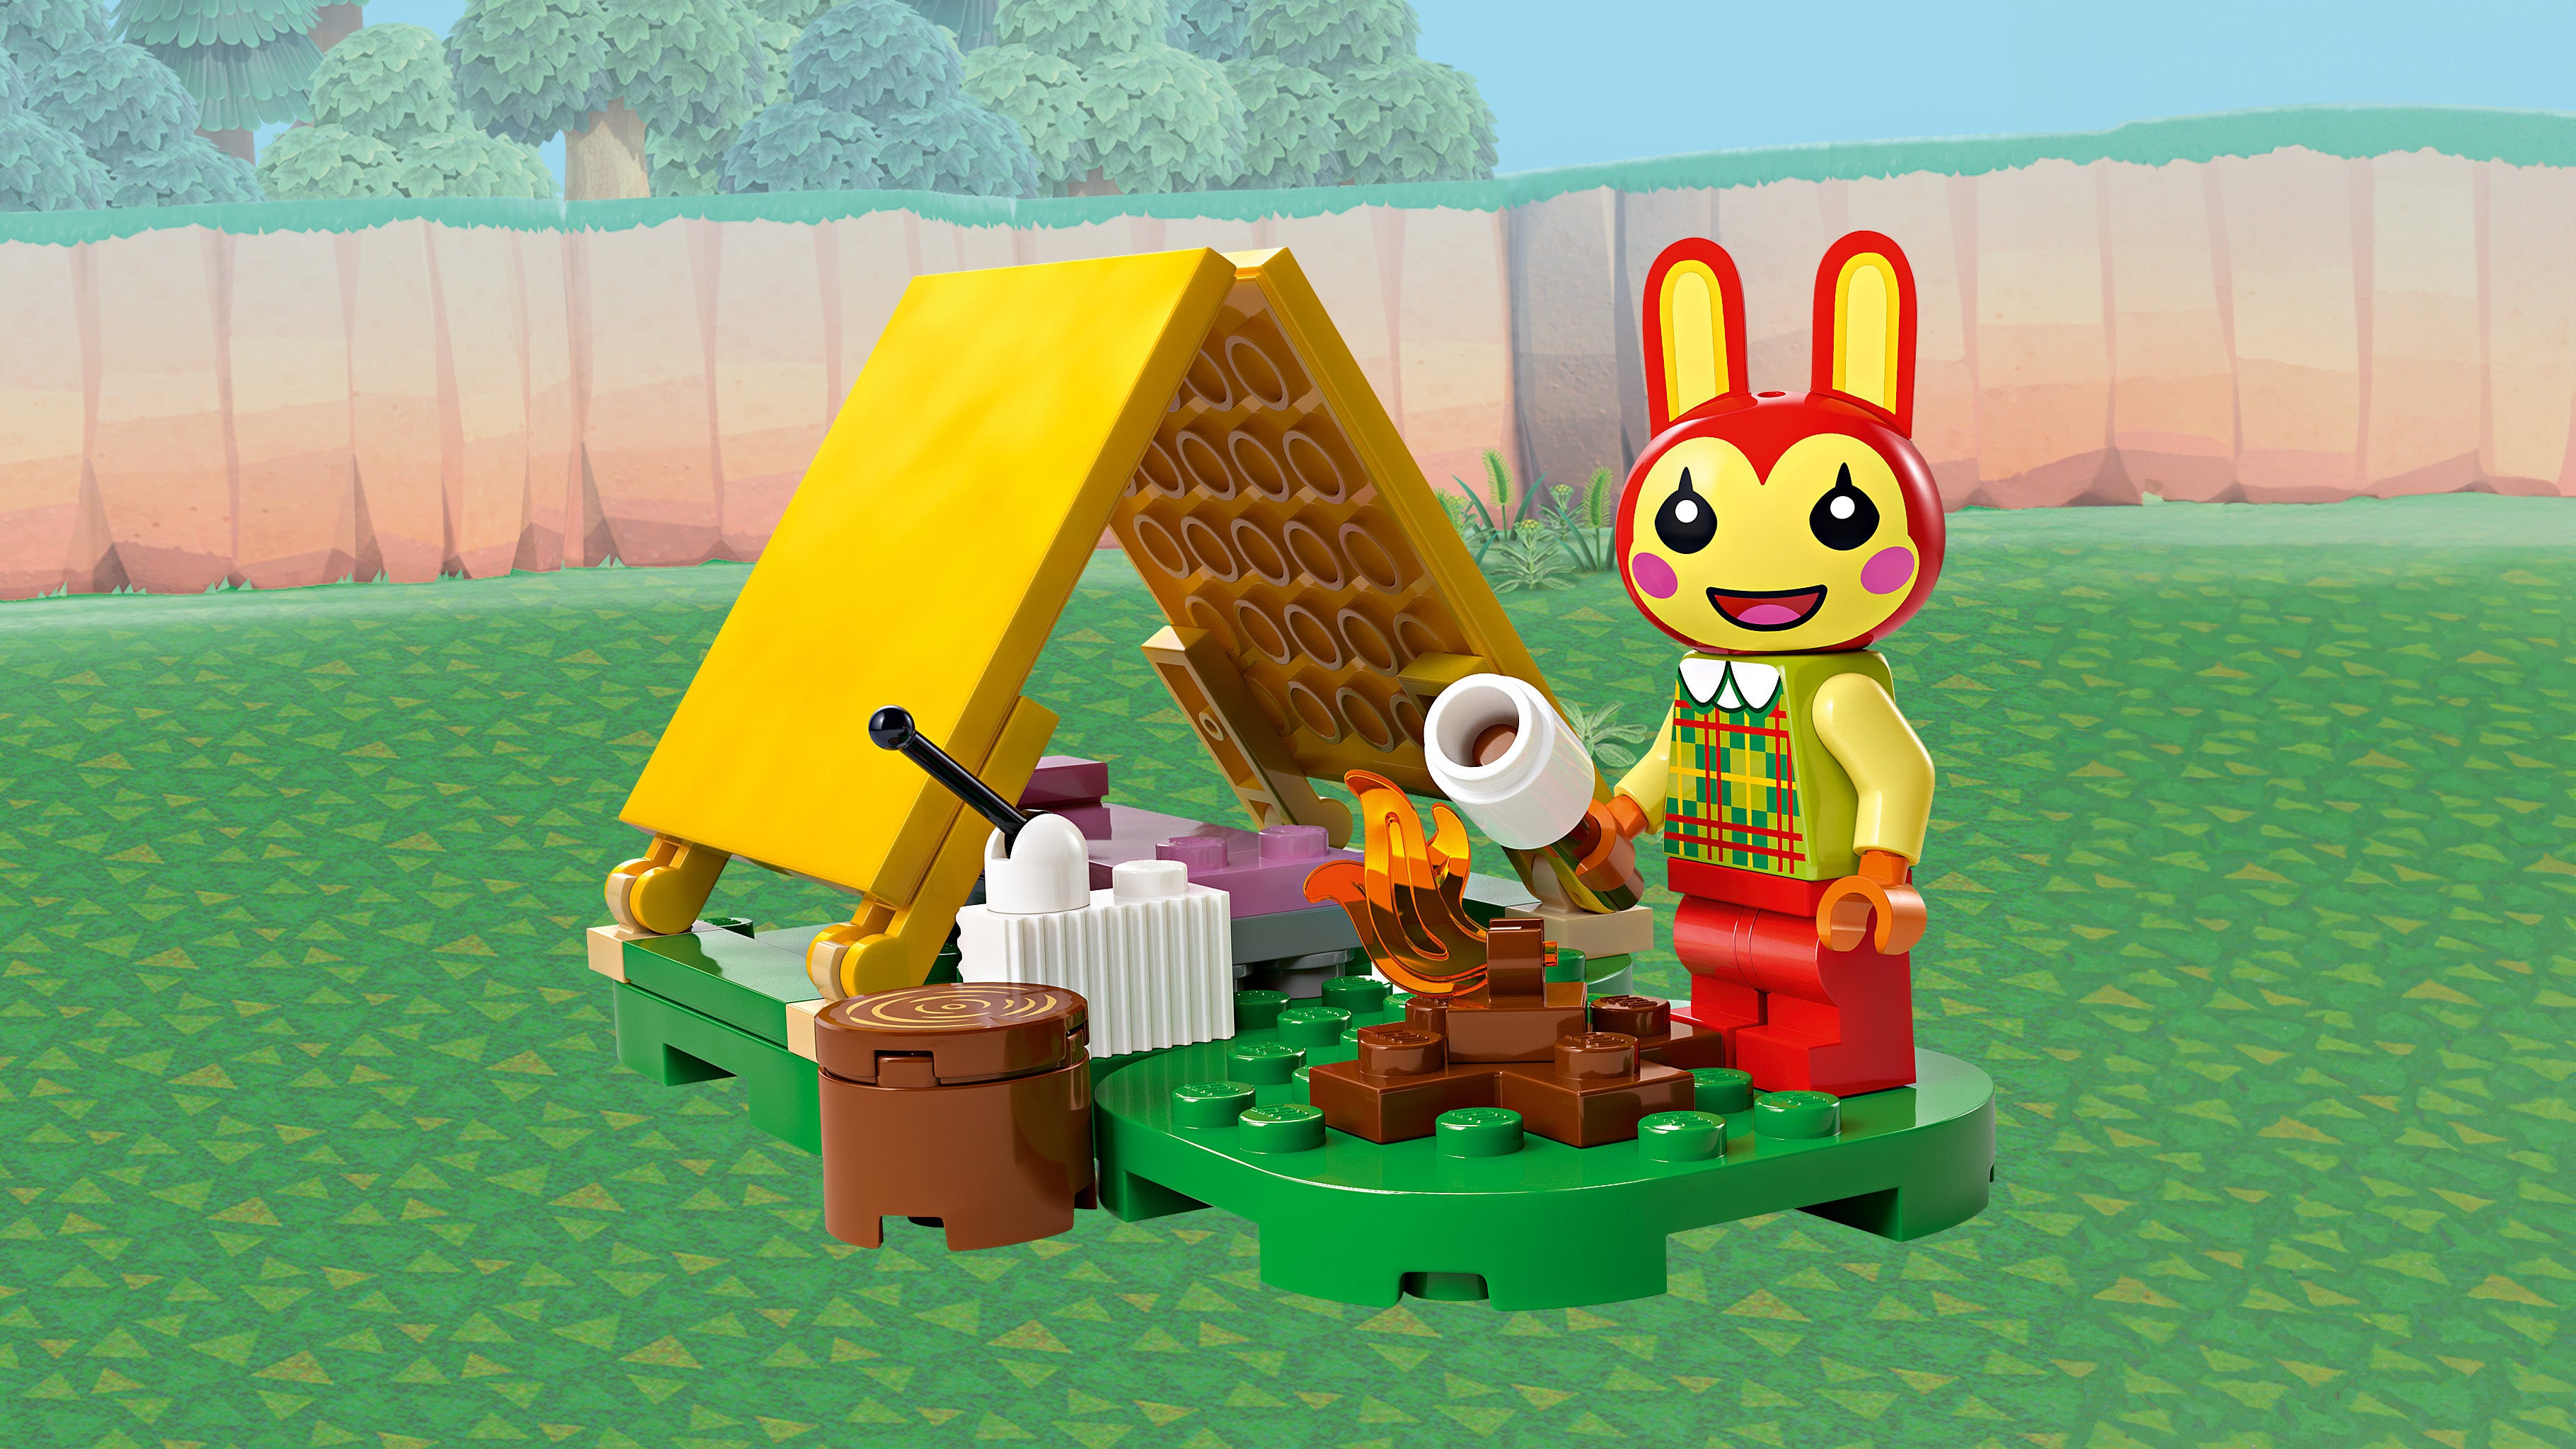 Lego 77047 Bunnies Outdoor Activitiy